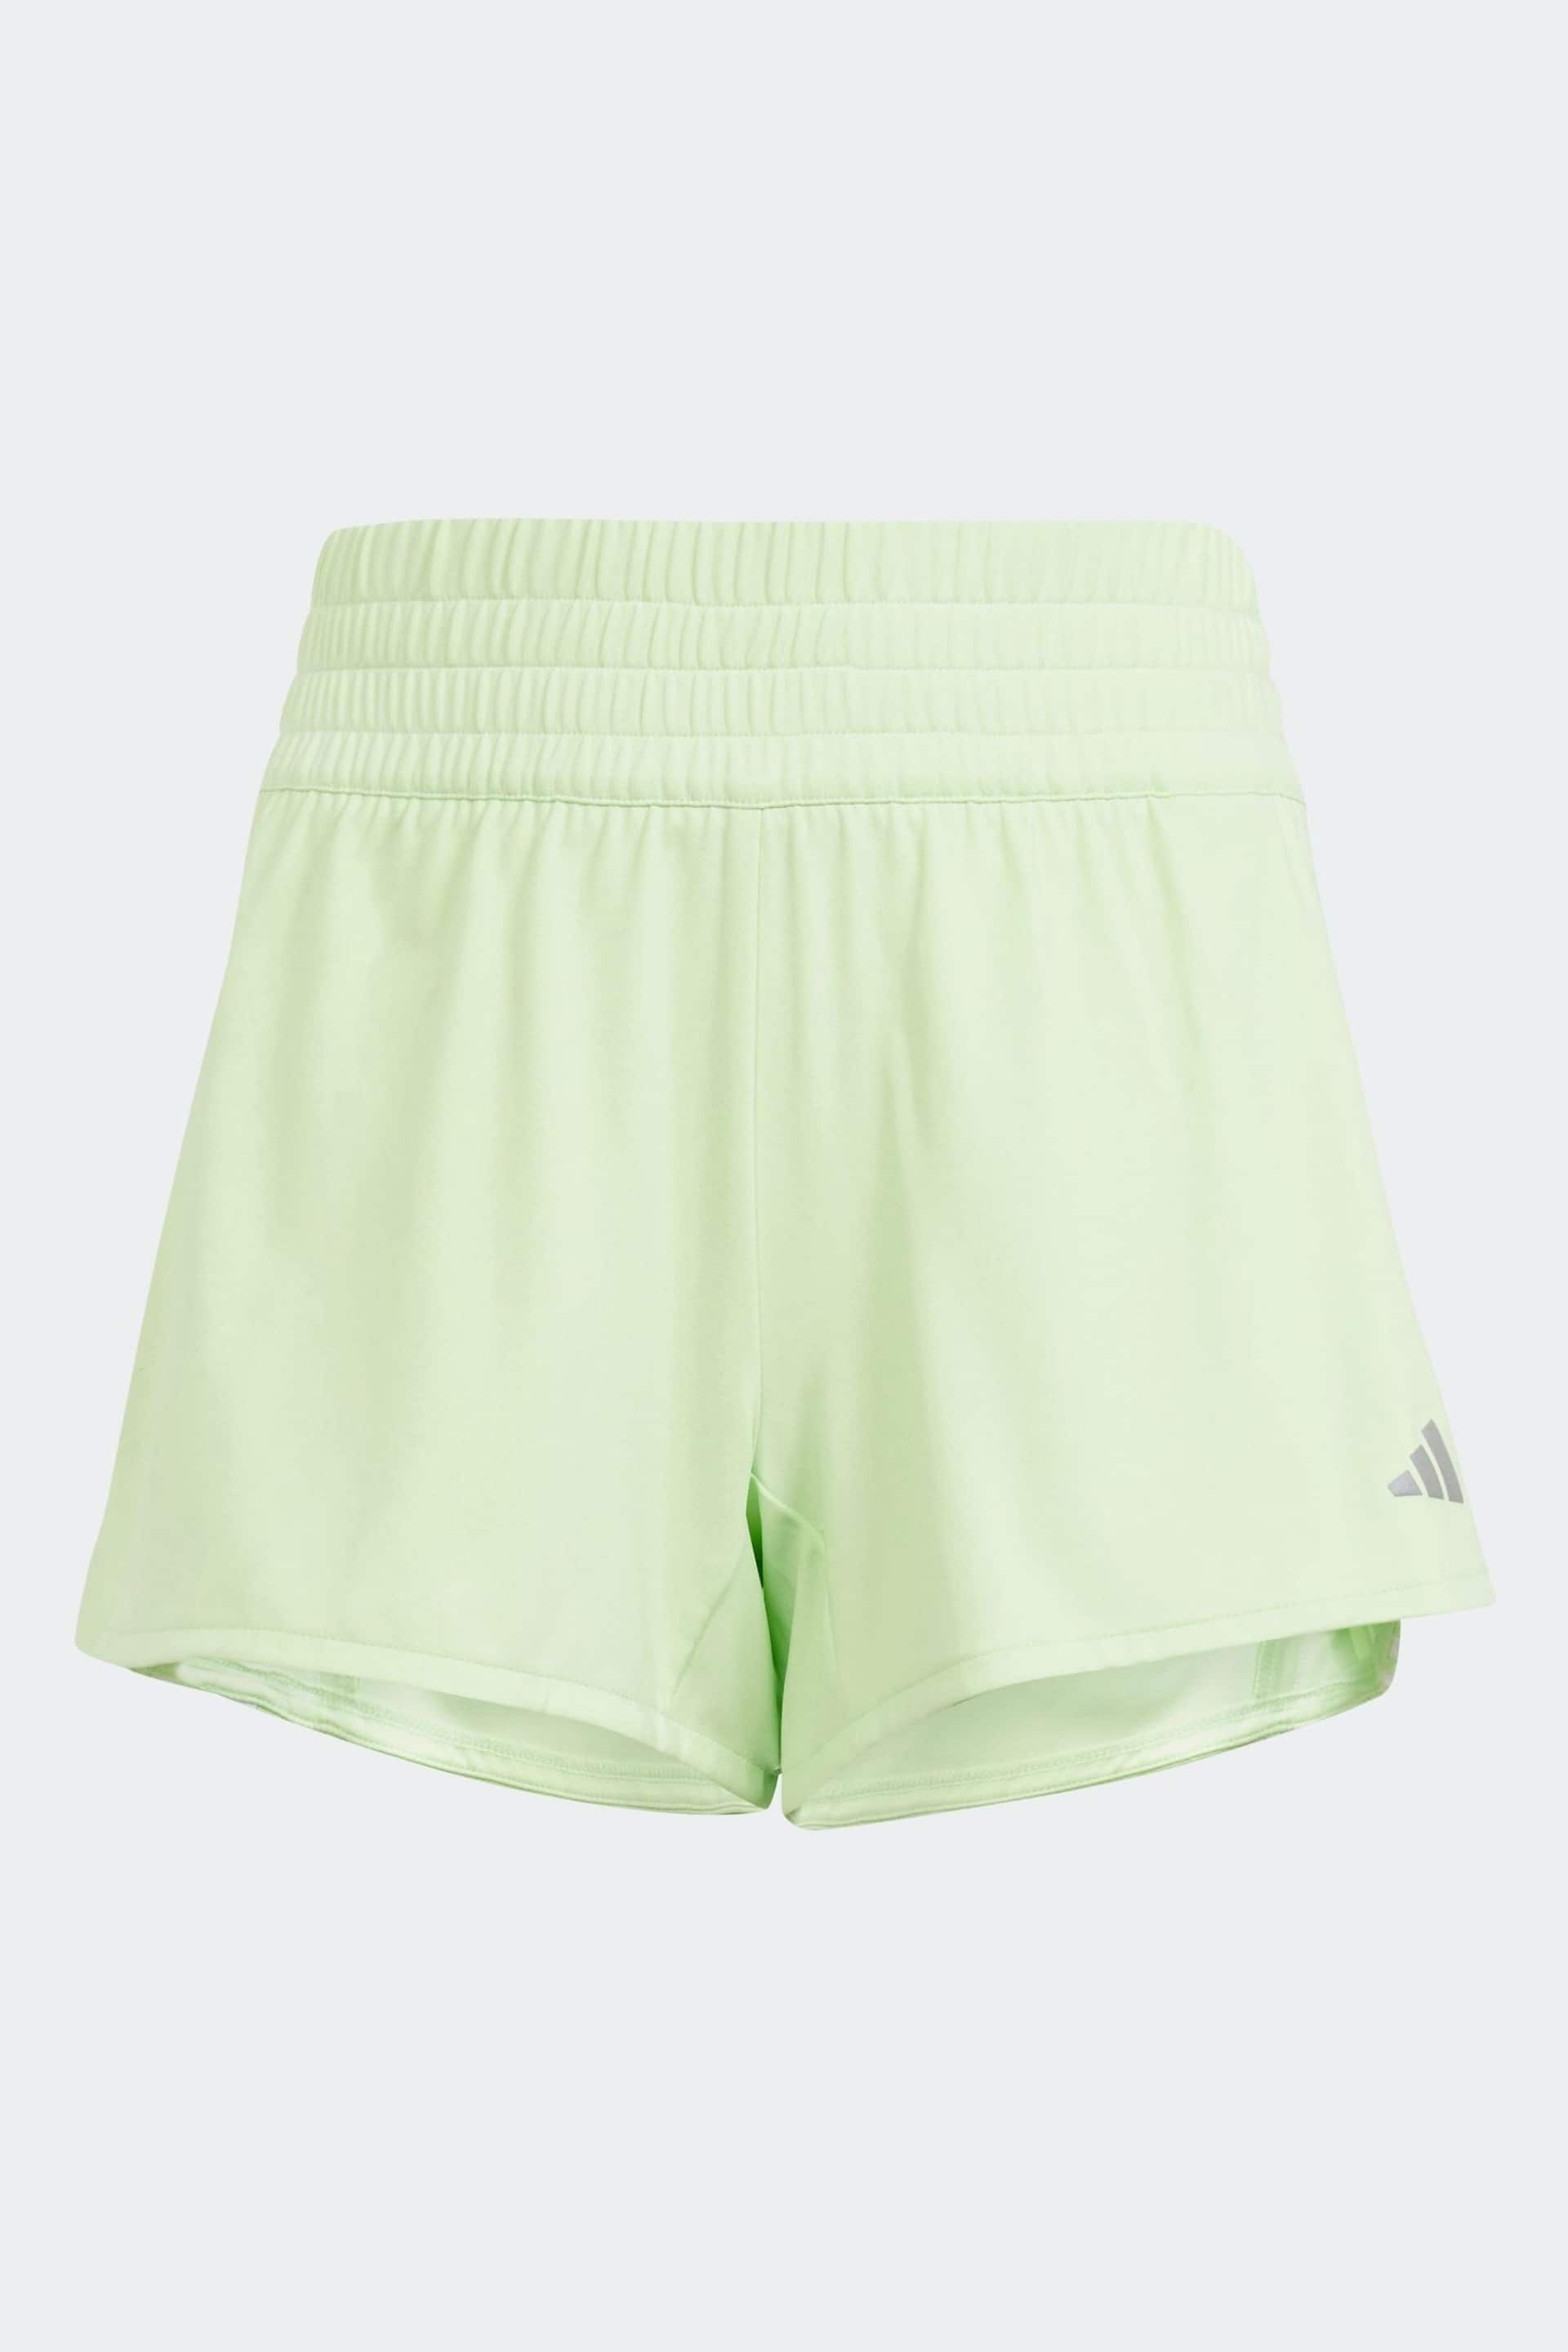 adidas Green Kids Sportswear Pacer Shorts - Image 1 of 4